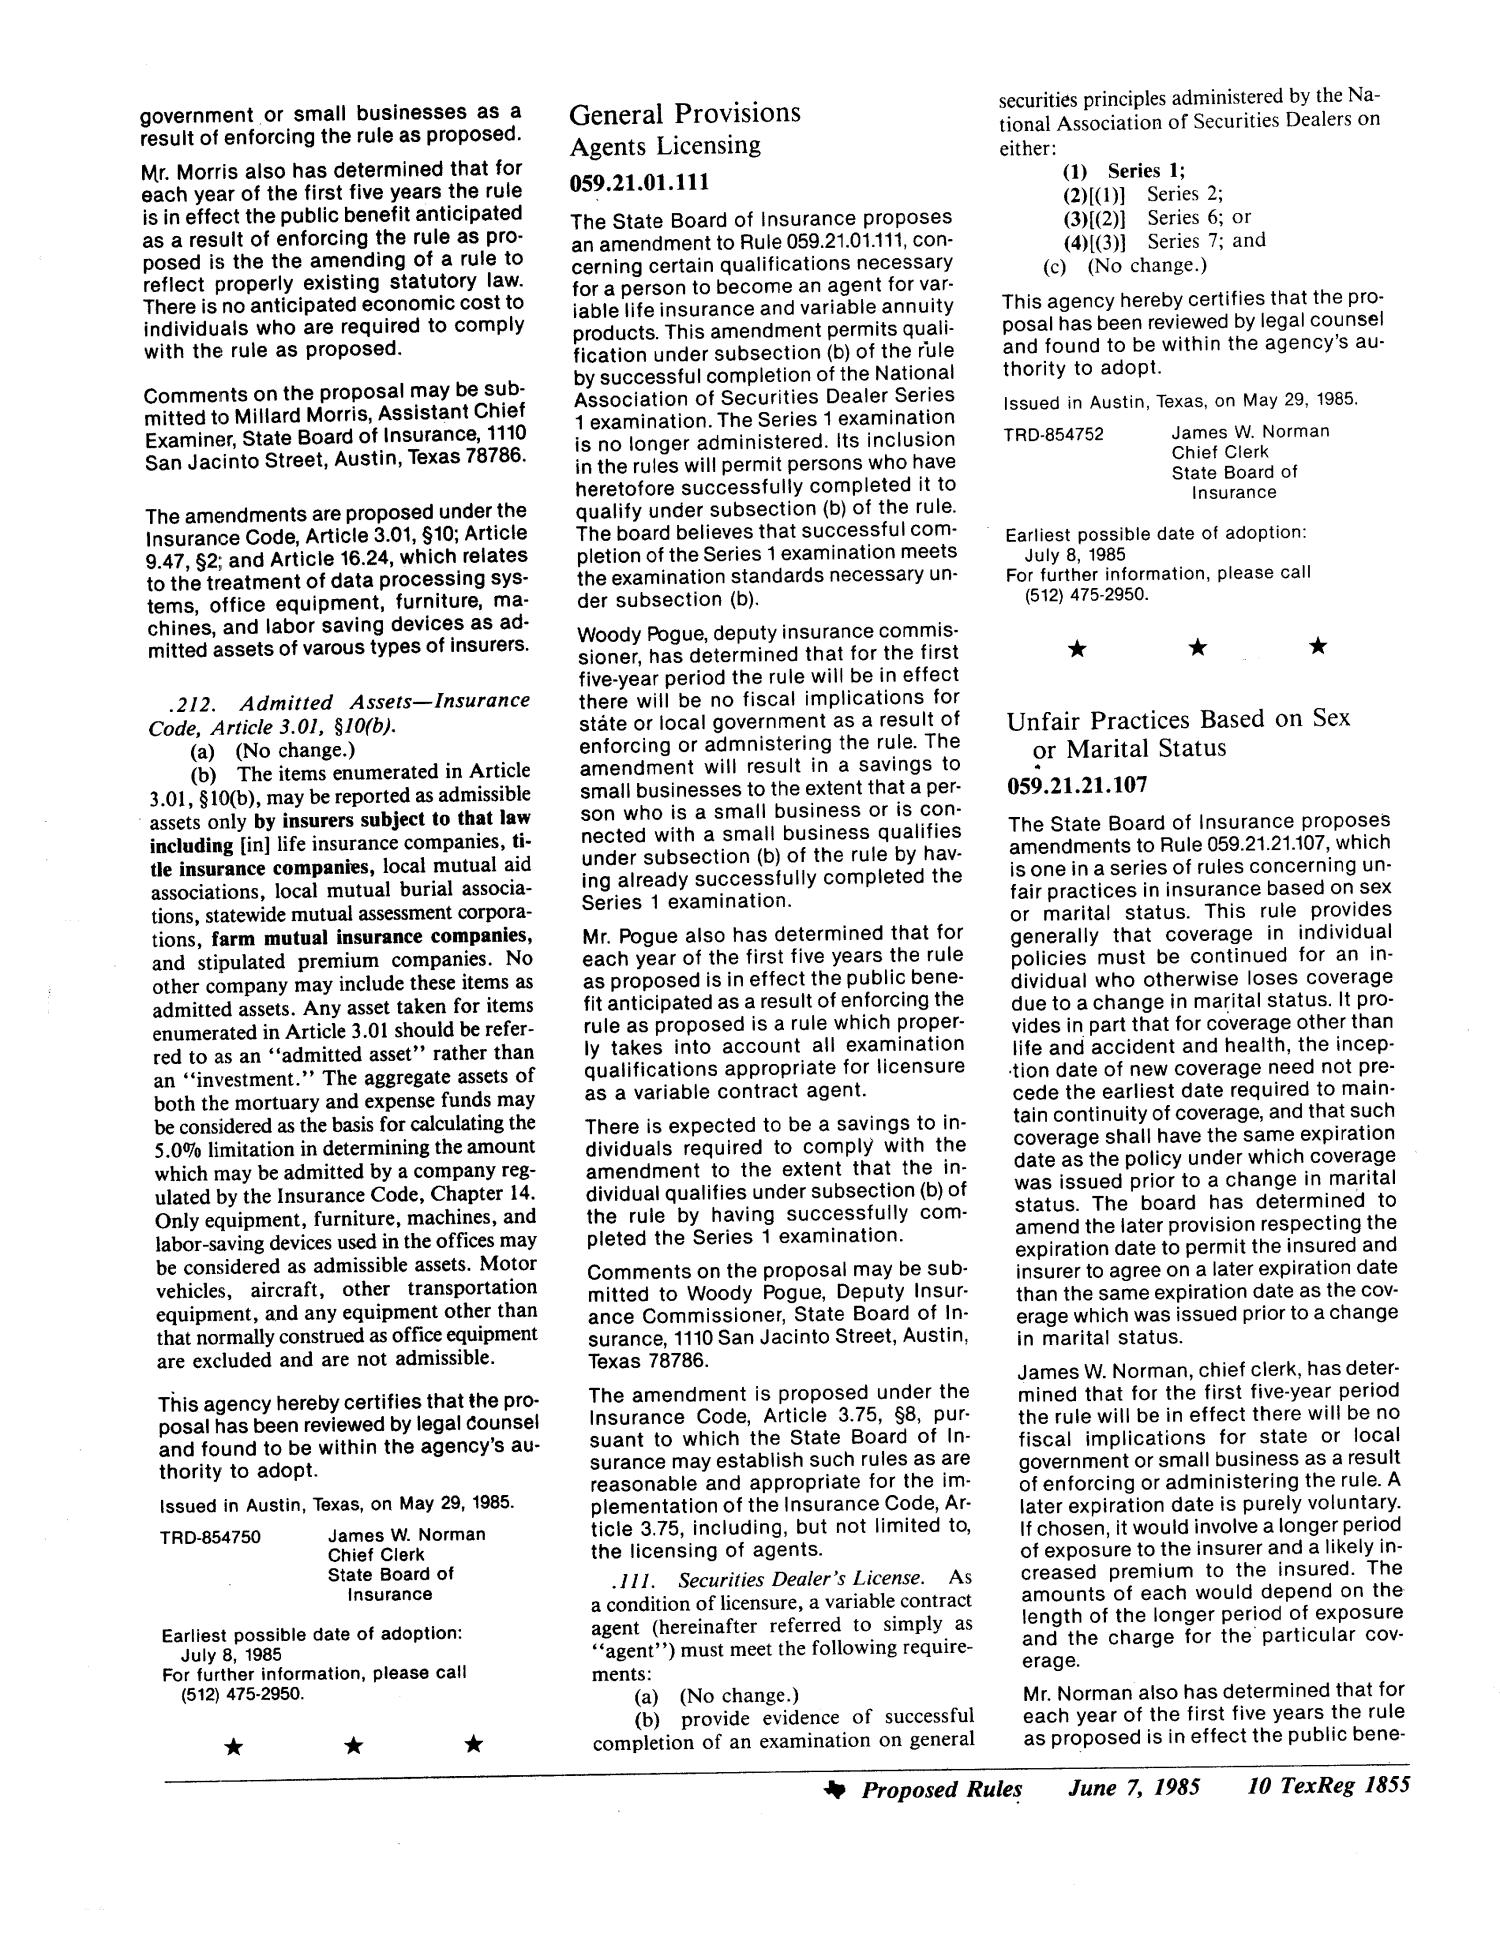 Texas Register, Volume 10, Number 44, Pages 1807-1878, June 7, 1985
                                                
                                                    1855
                                                